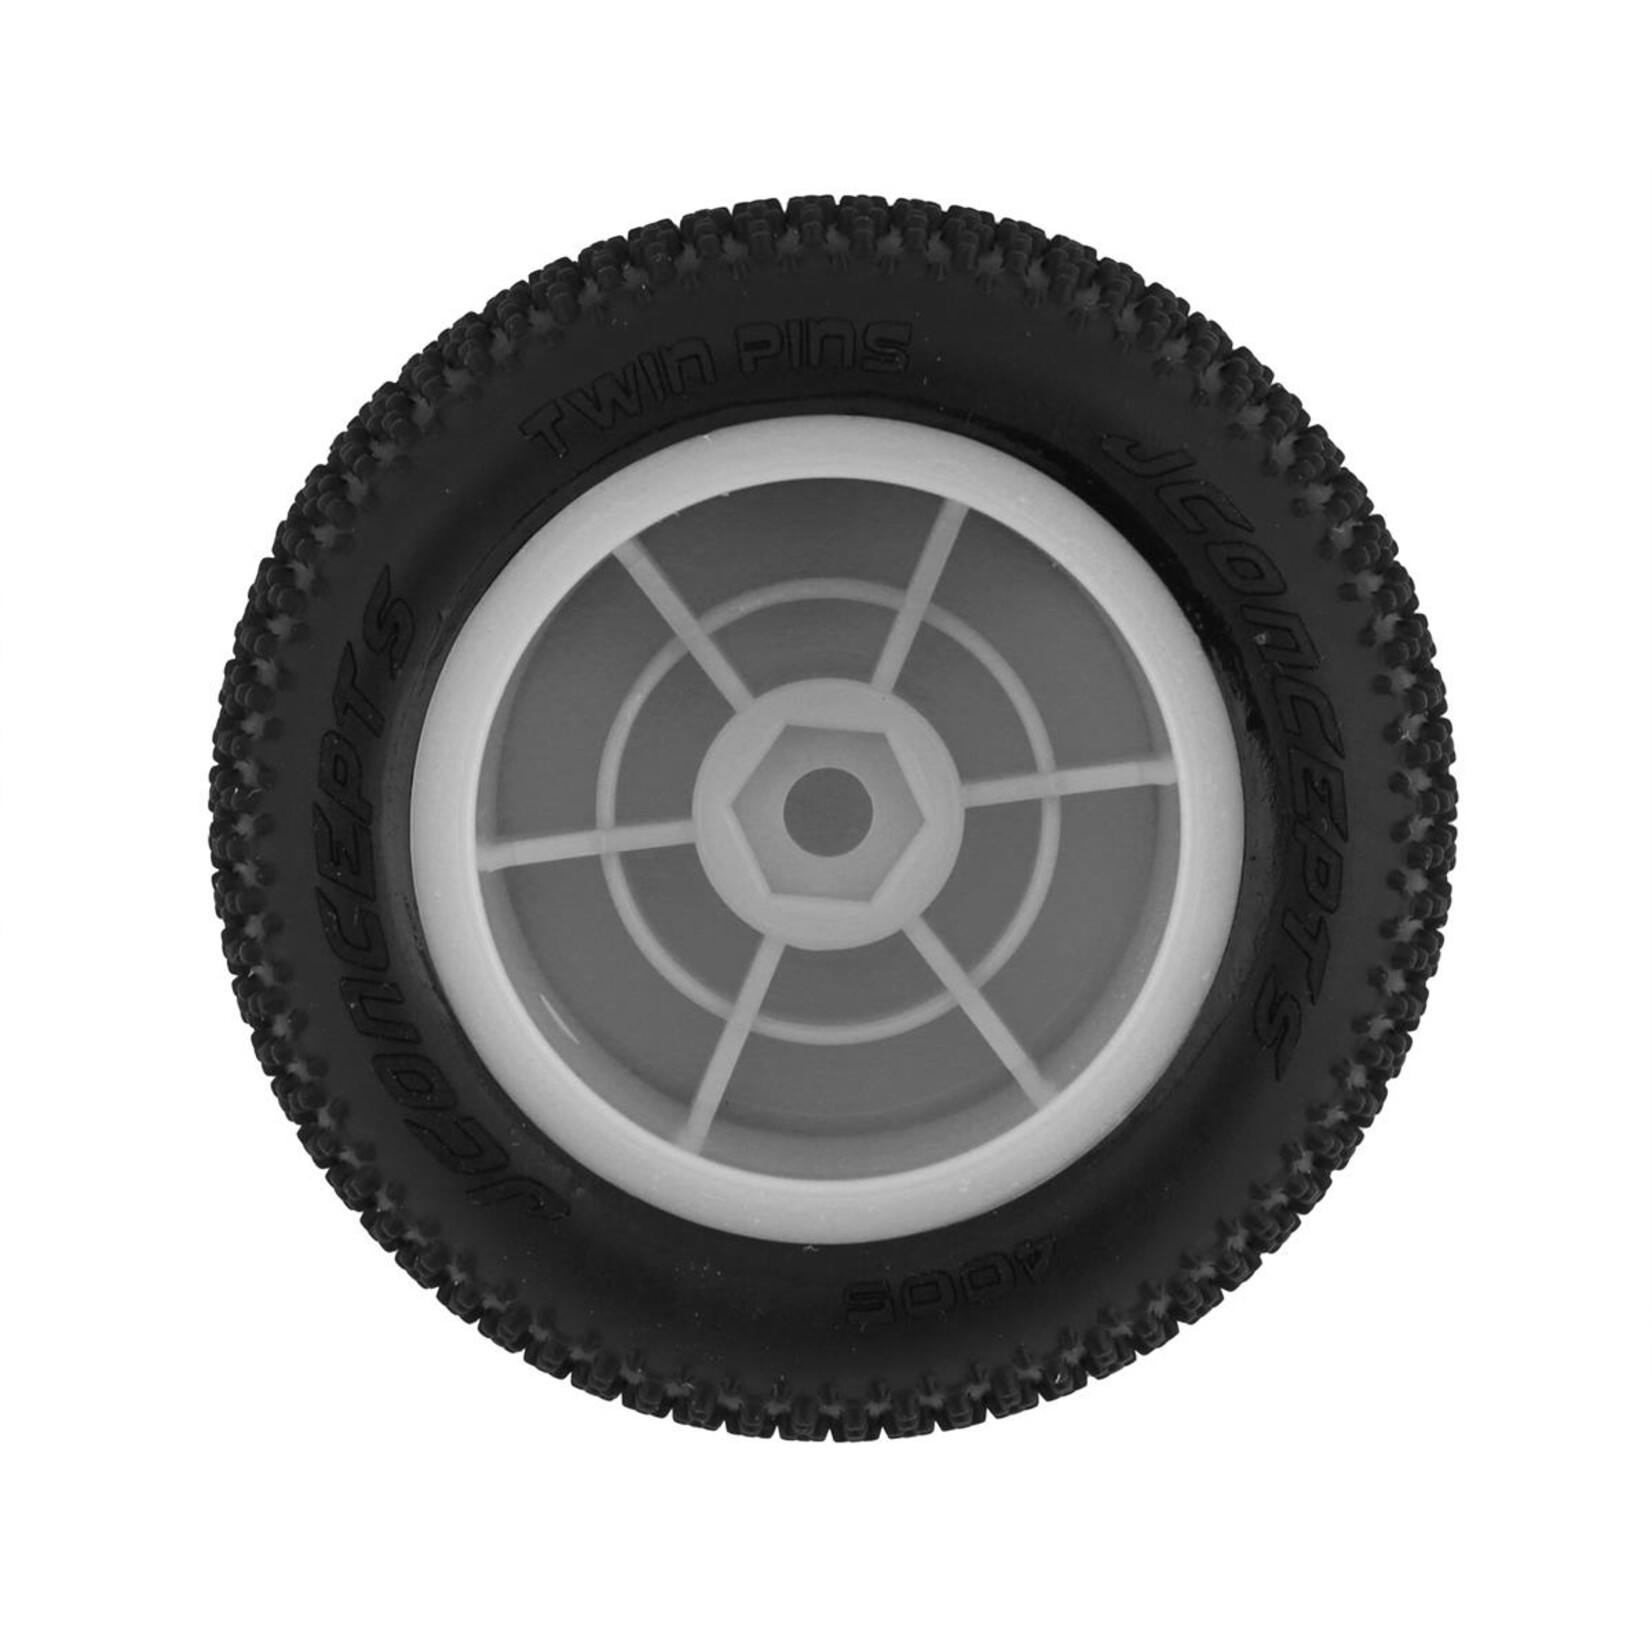 JConcepts JConcepts Mini-B/Mini-T 2.0 Twin Pin Pre-Mounted Rear Tires (White) (2) (Pink) #4005-101021